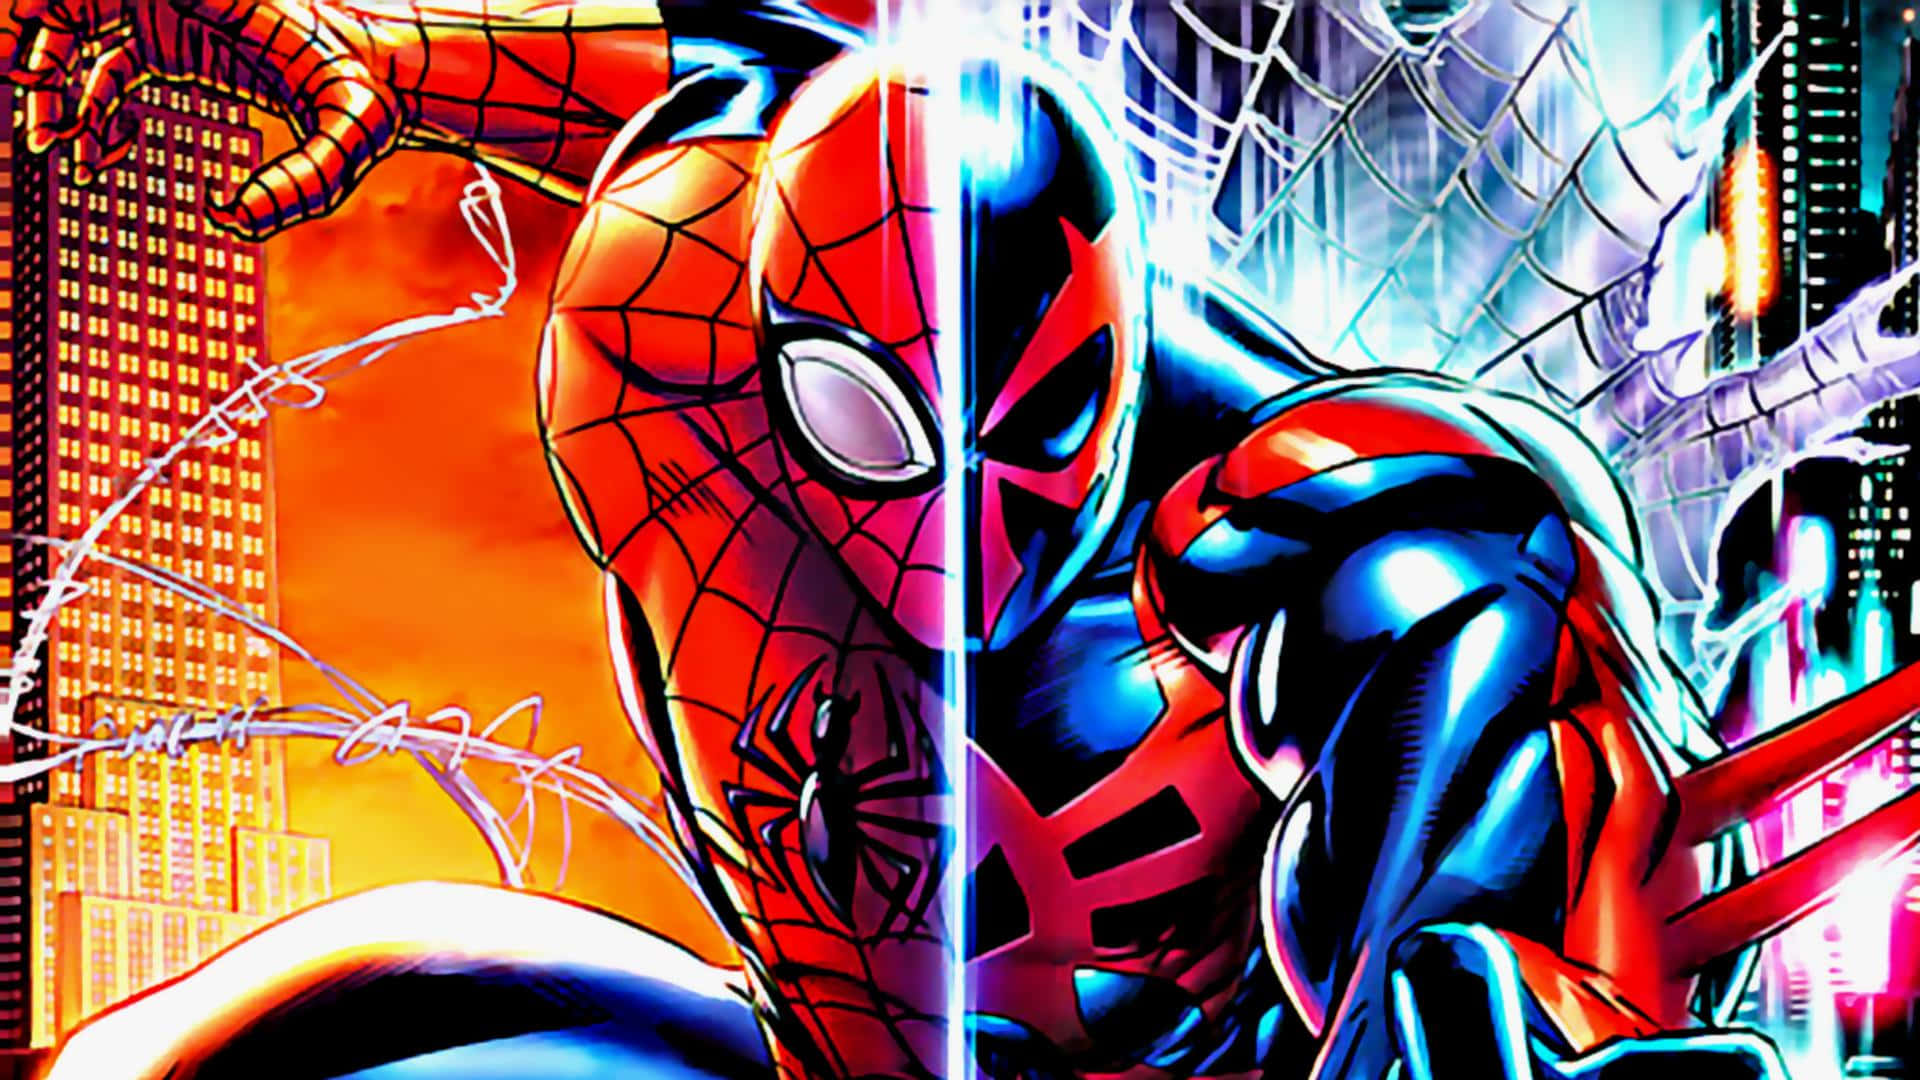 Spider-Man 2099 in action in a futuristic cityscape Wallpaper